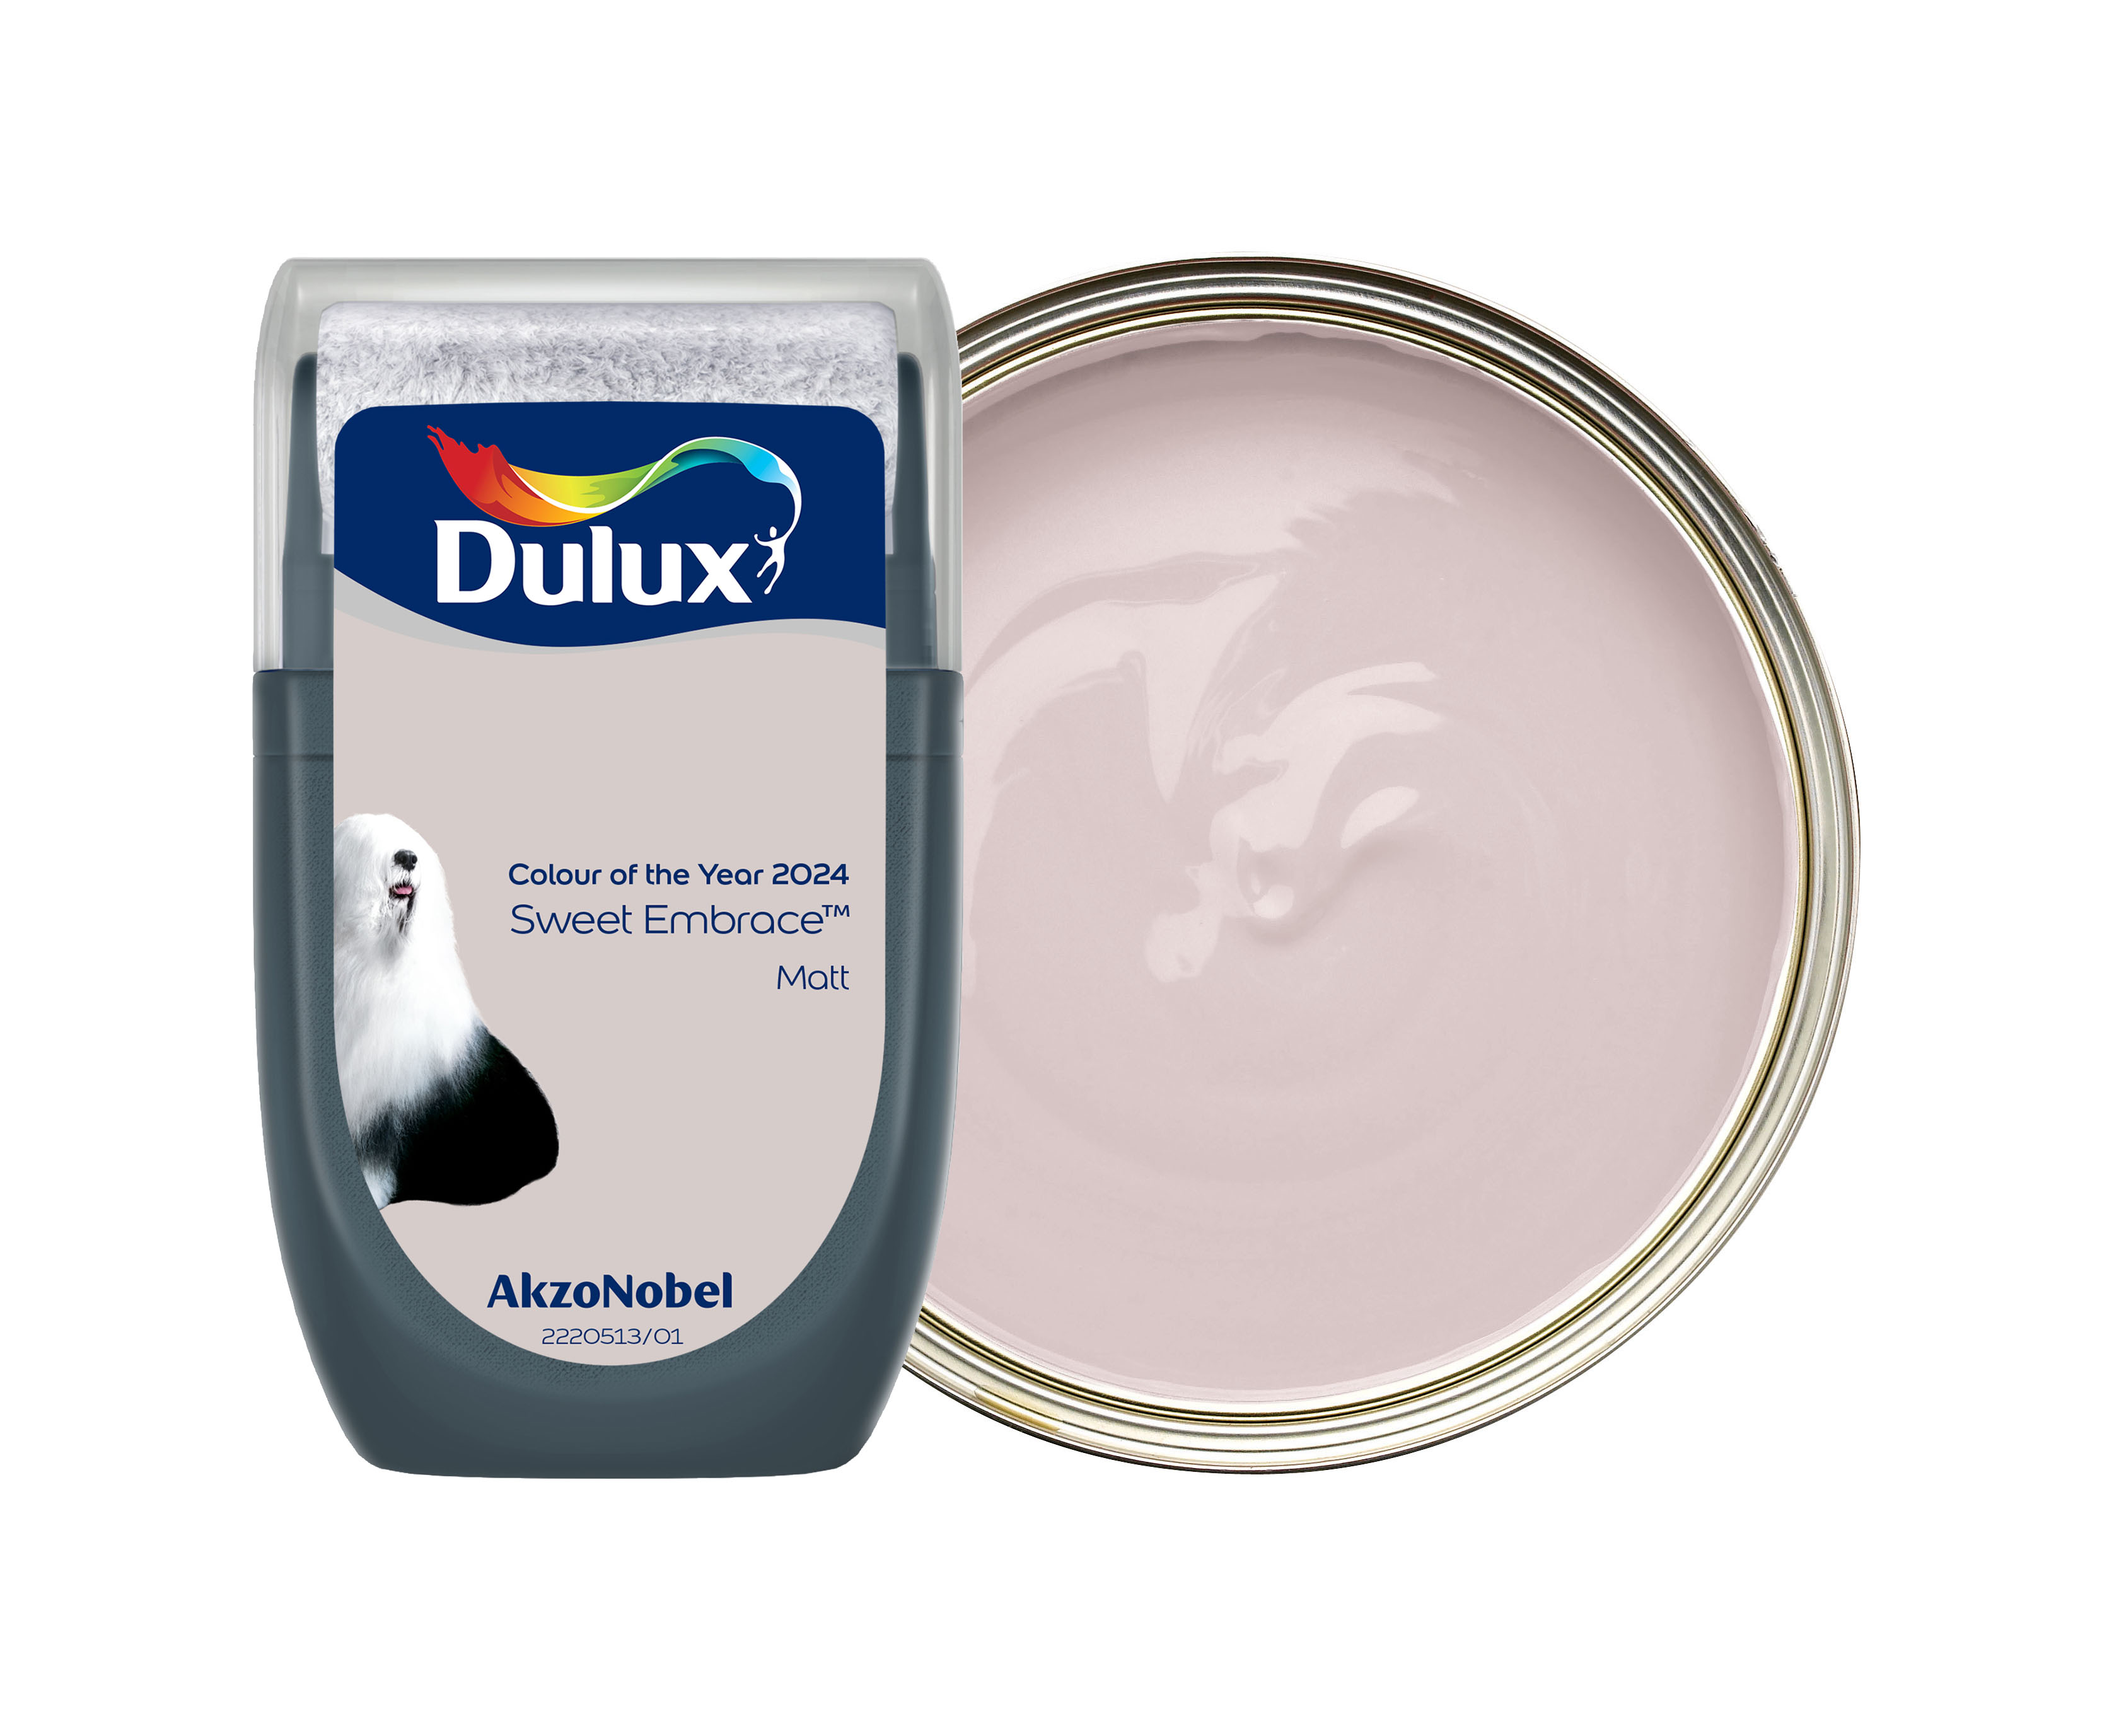 Dulux Colour of the Year 2024 Sweet Embrace Matt Emulsion Paint Tester Pot - 30ml